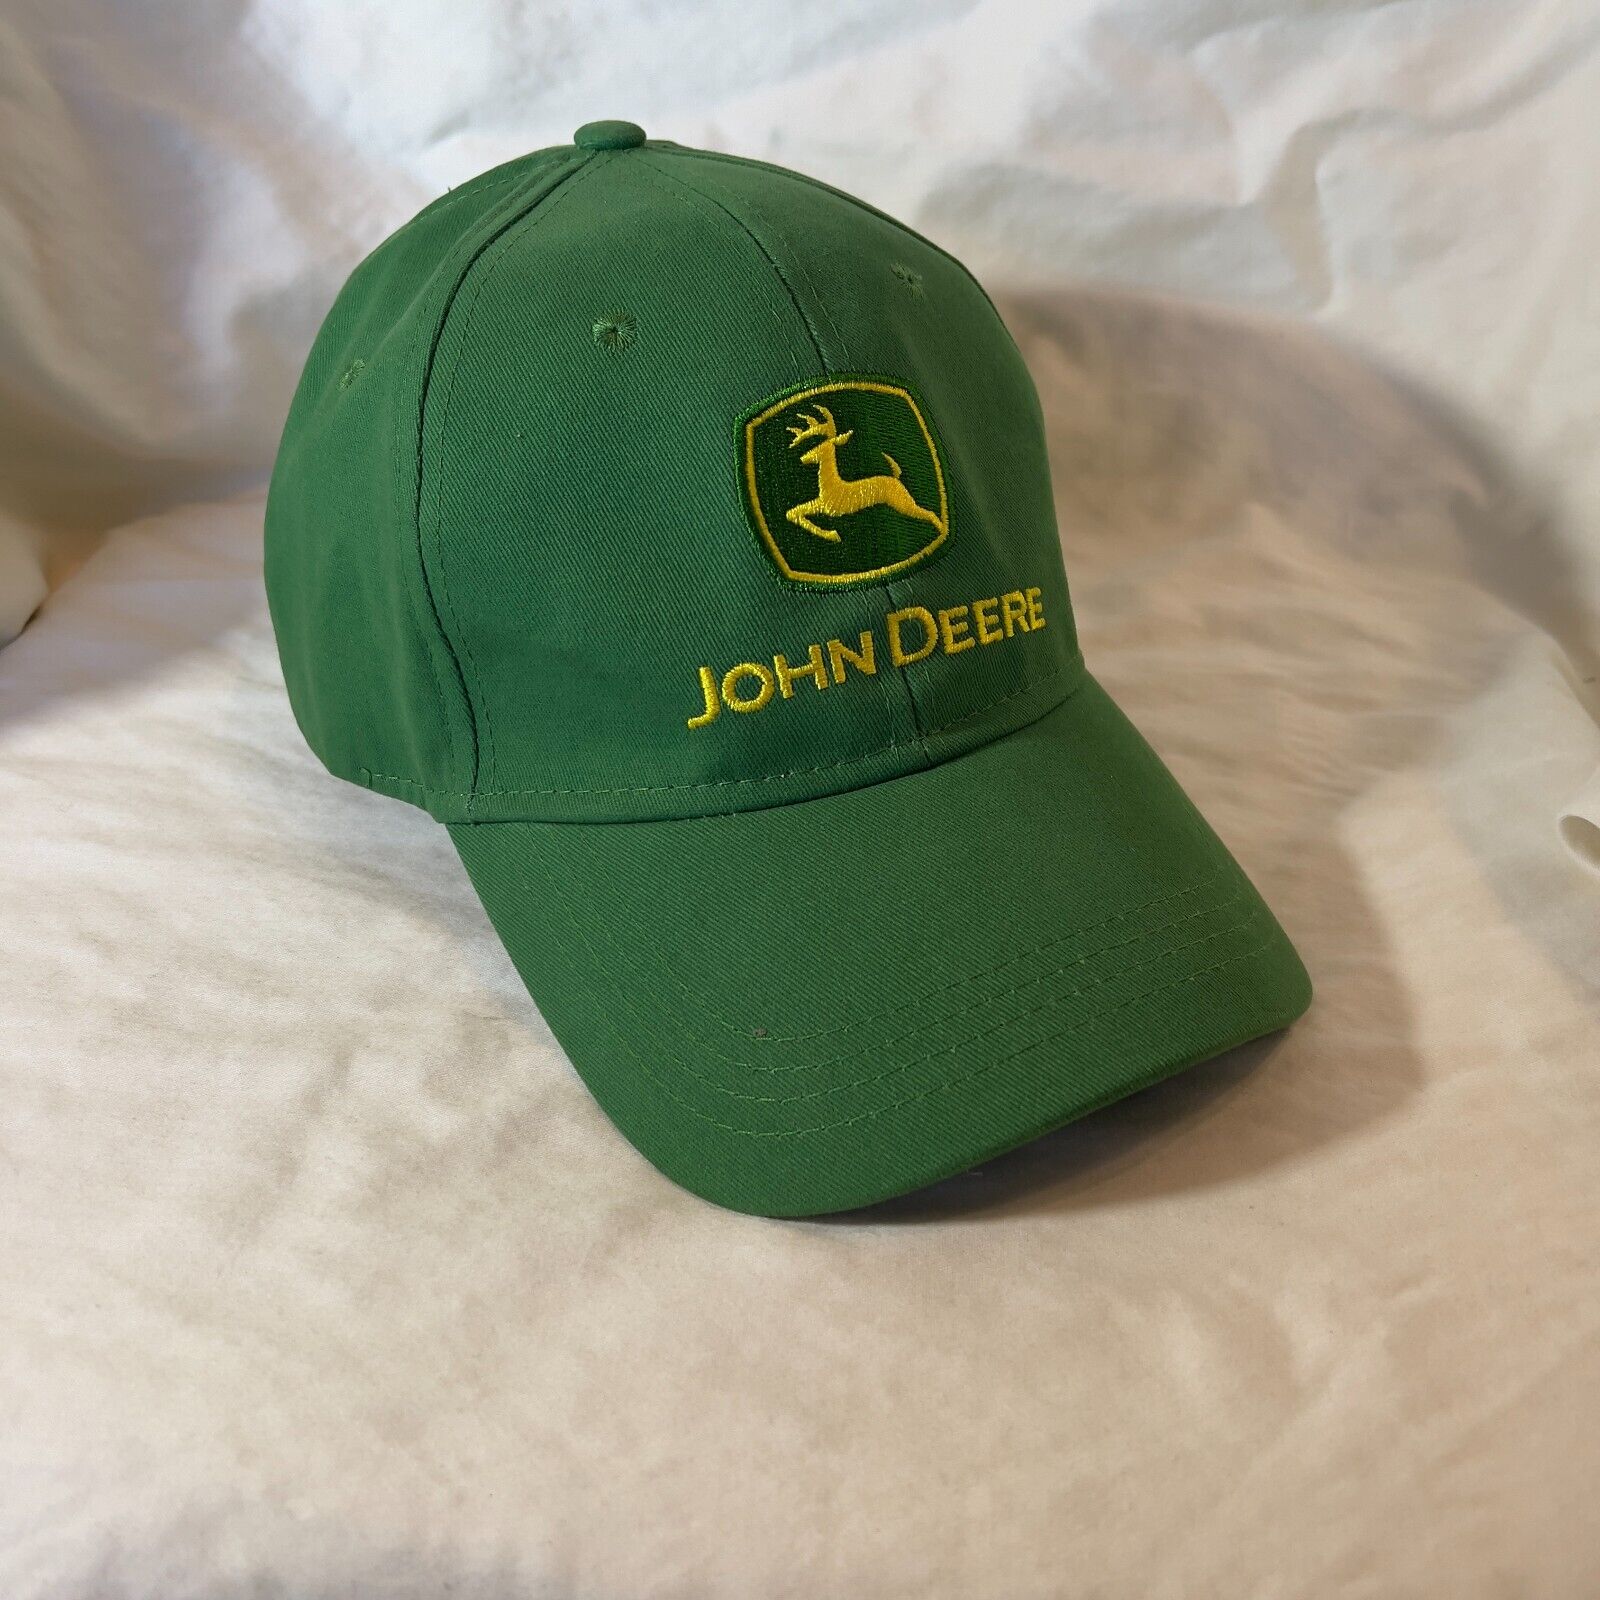 John Deere Baseball Cap Adjustable Strap Back/One Size -RN# 114640 Green